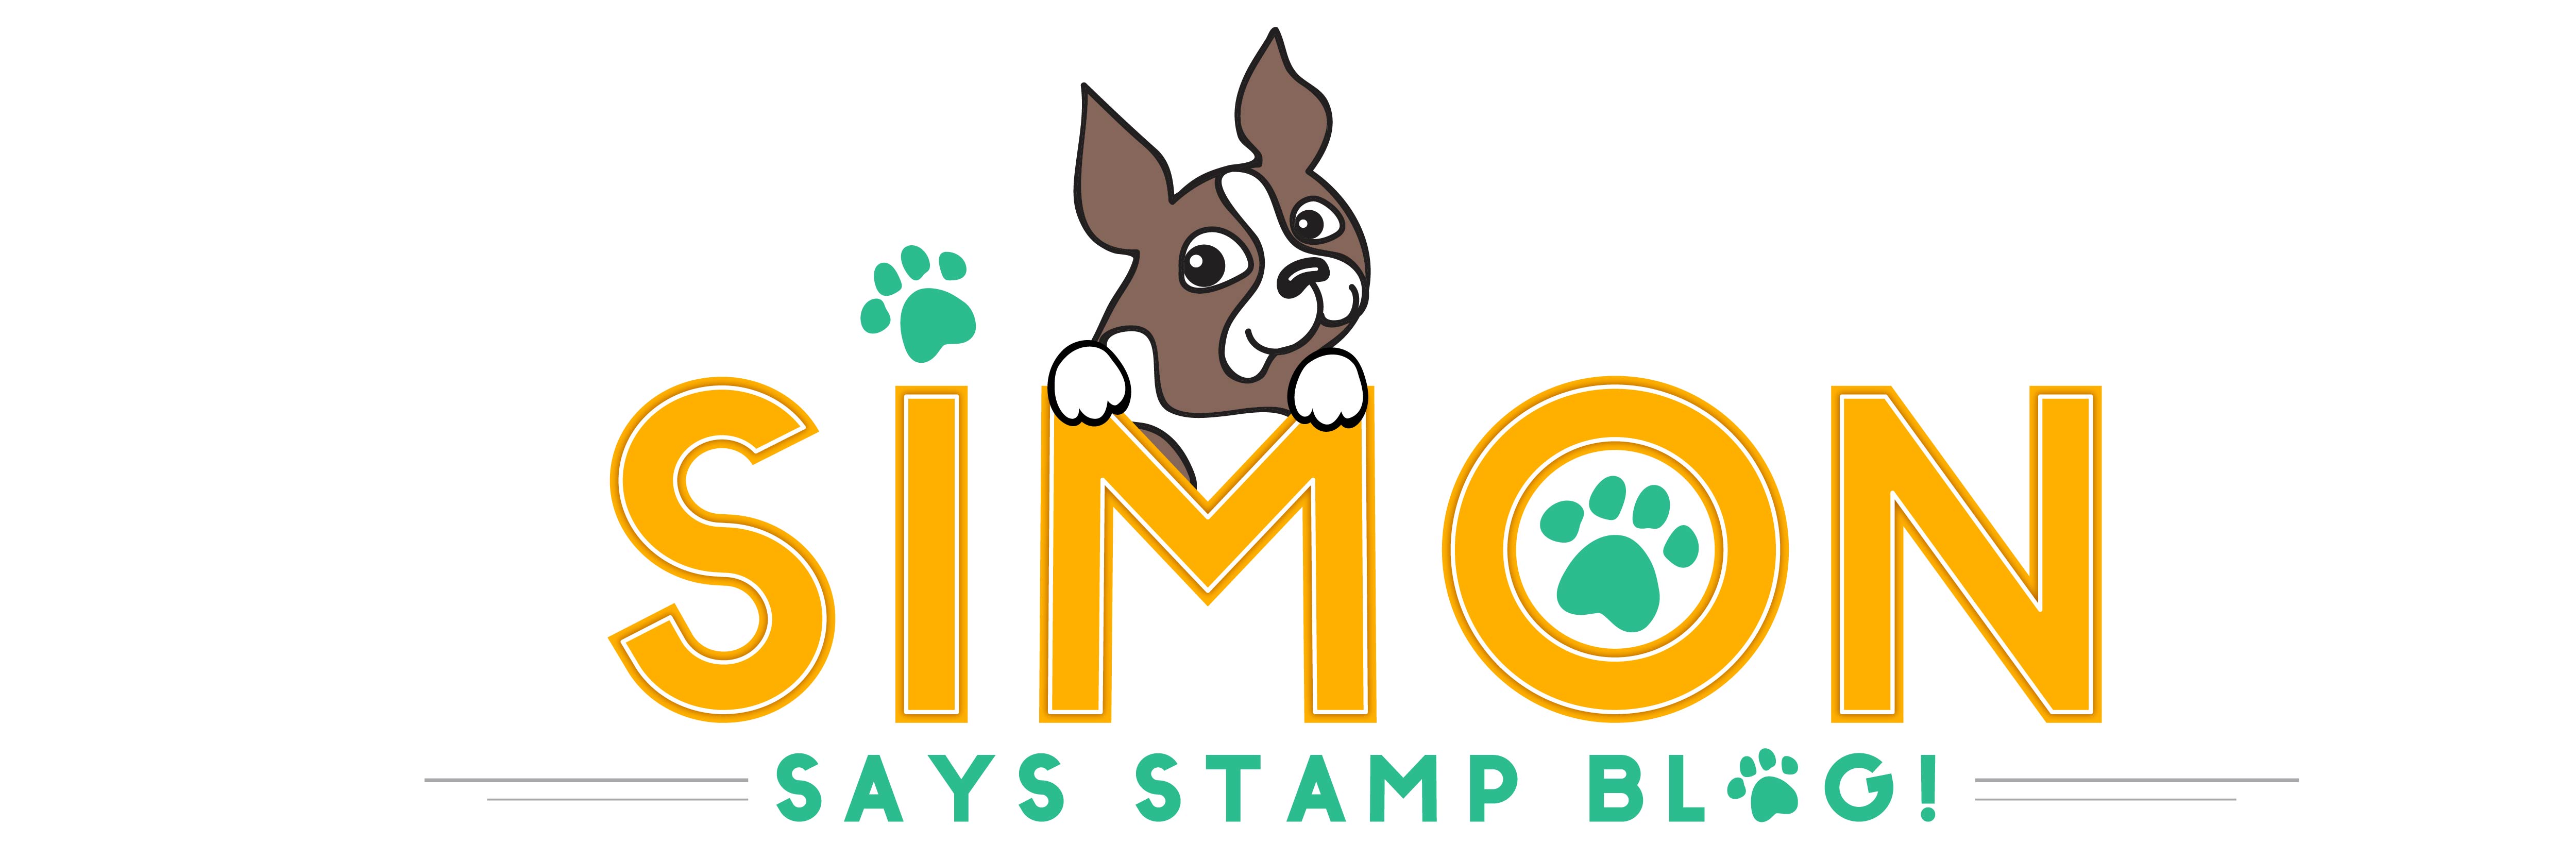 simon says stamp cyber monday